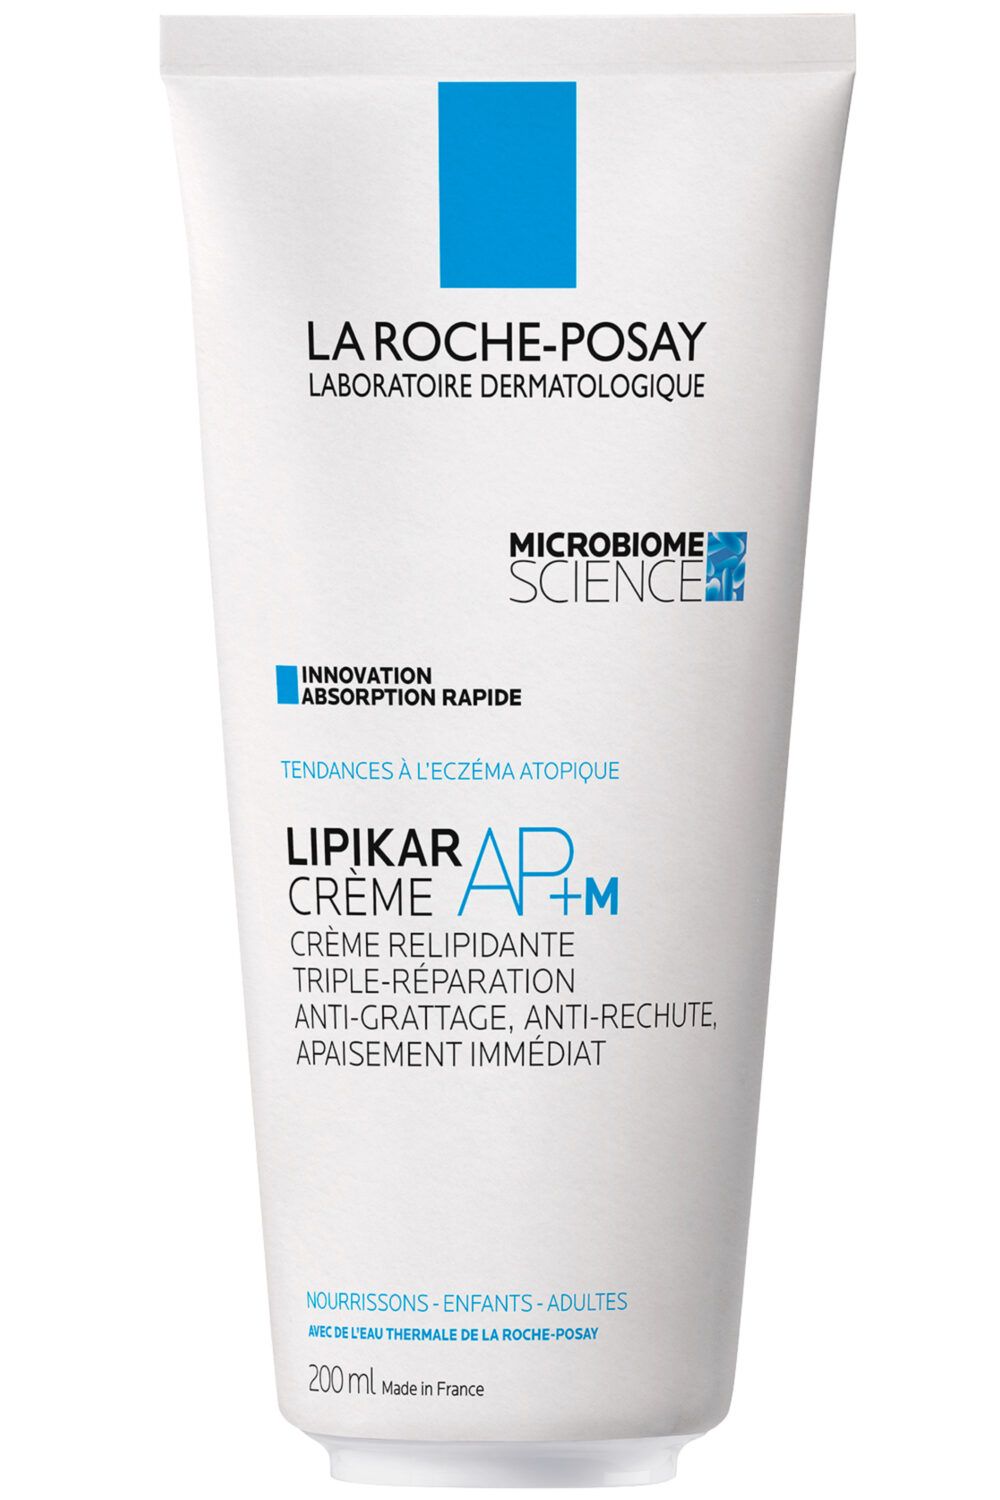 La Roche-Posay - Baume AP+M relipidant peau sèche tendance eczema atopique Lipikar 200ml